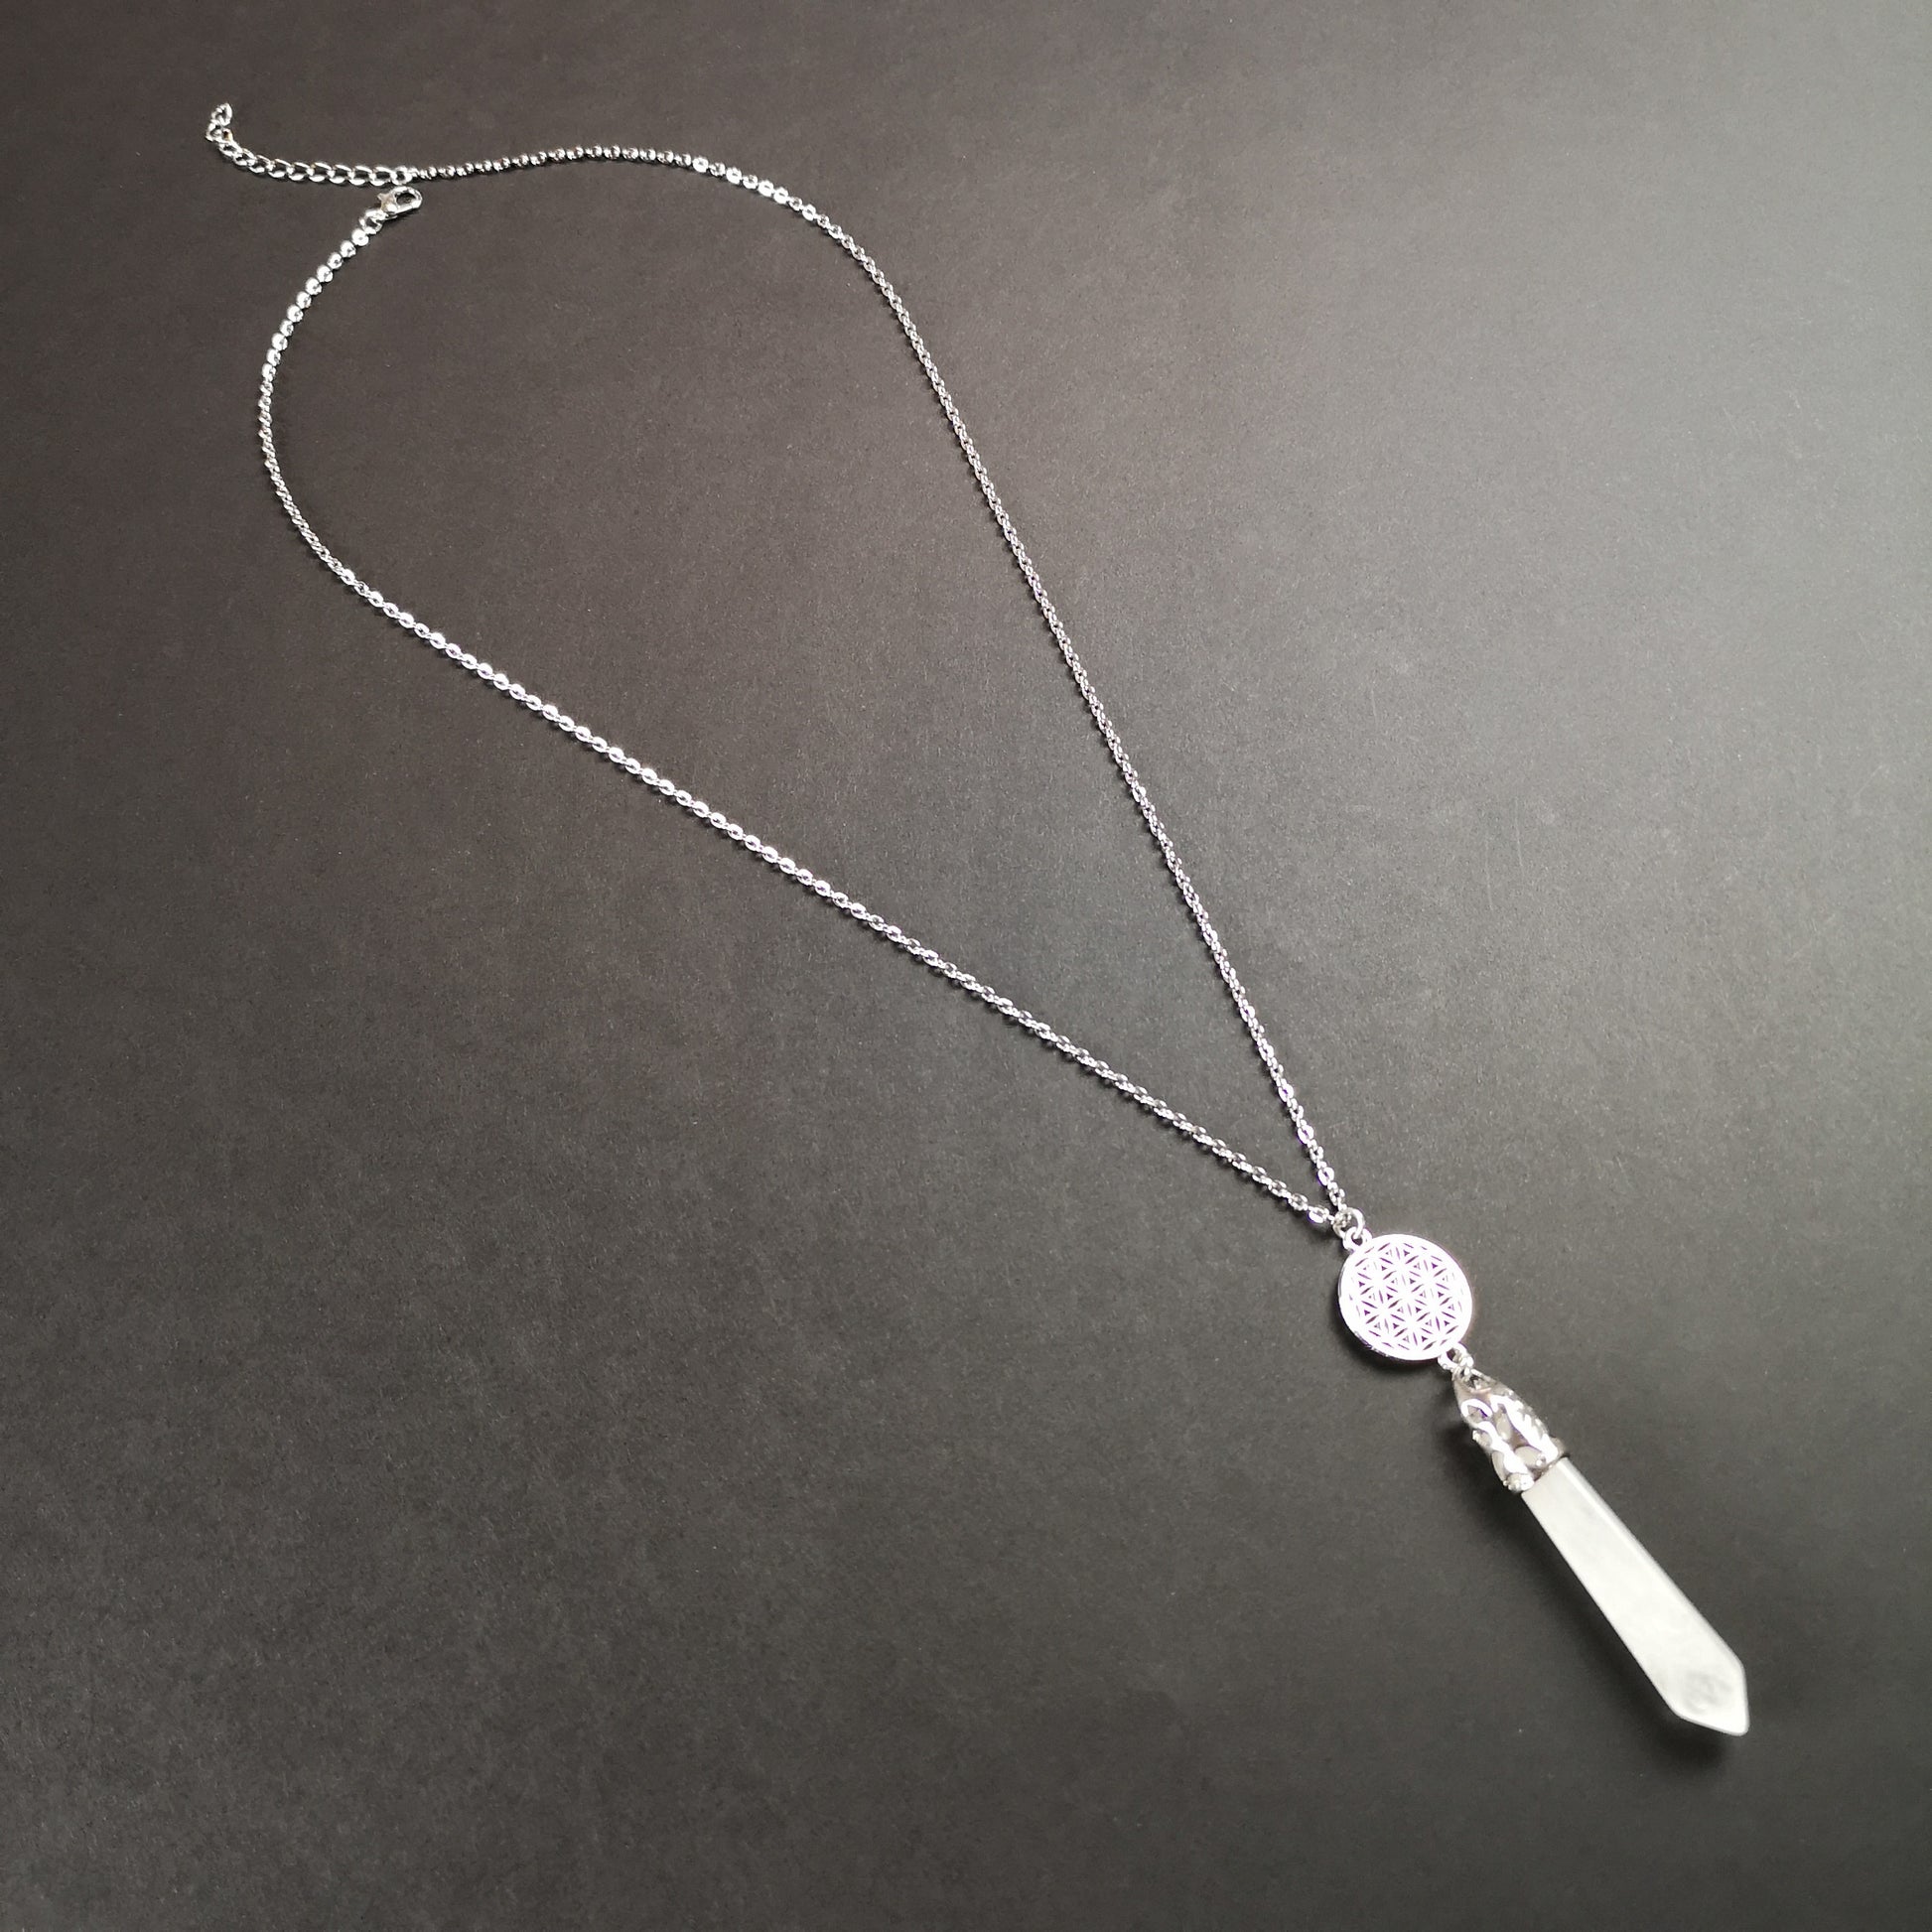 Quartz crystal flower of life pendulum necklace